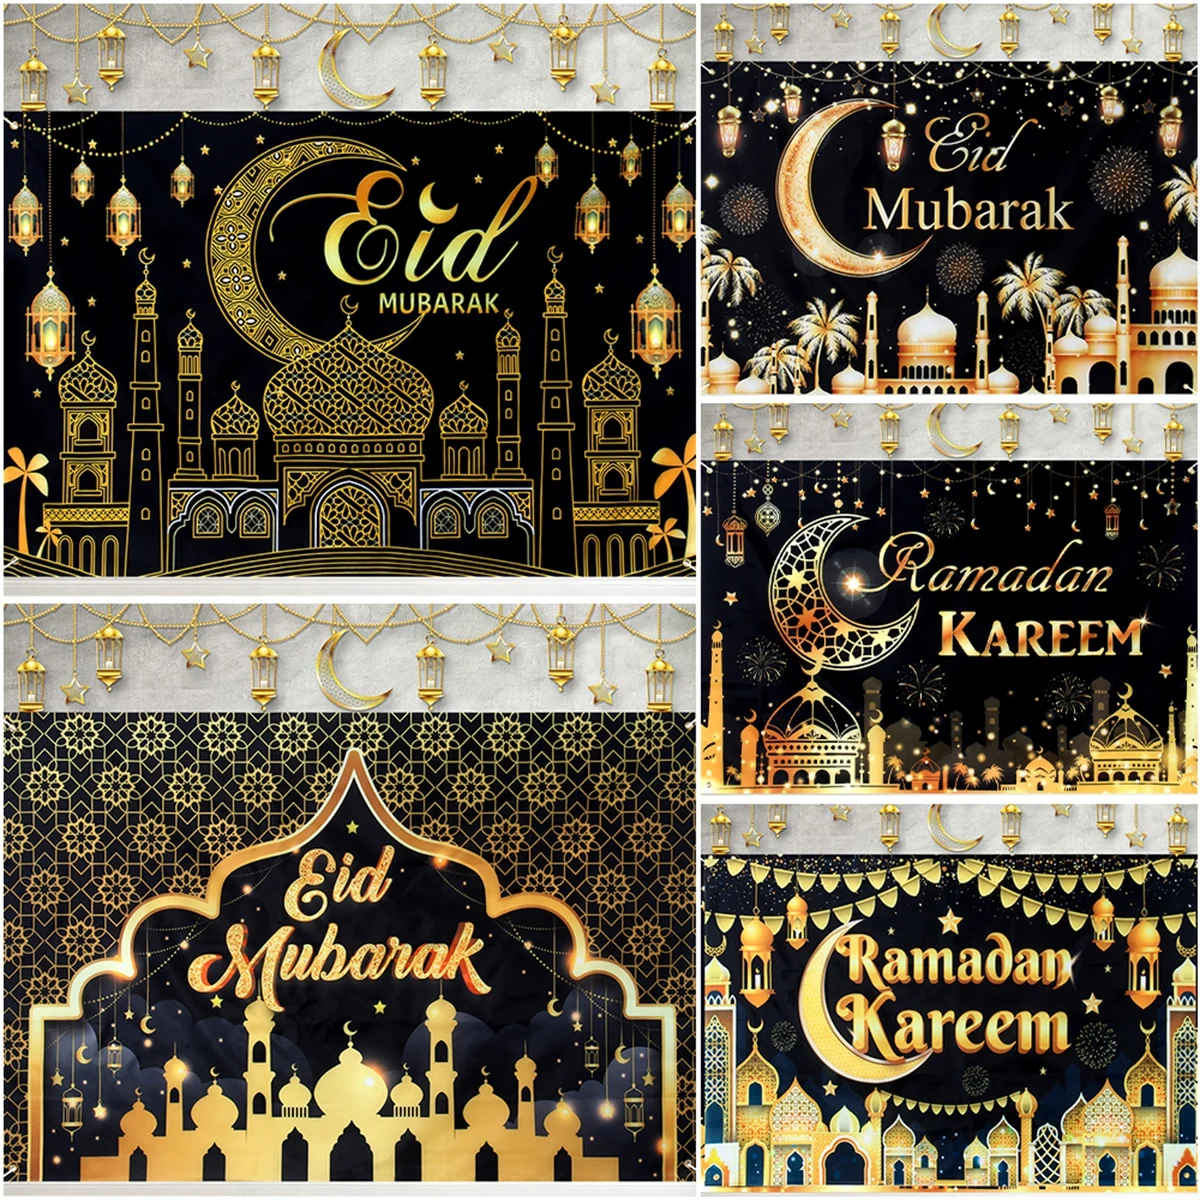 

Black Glod Eid Mubarak Photo Background Ramadan Kareem Islamic Mosque Moon Star Poster Banner Photography Backdrop Party Decor